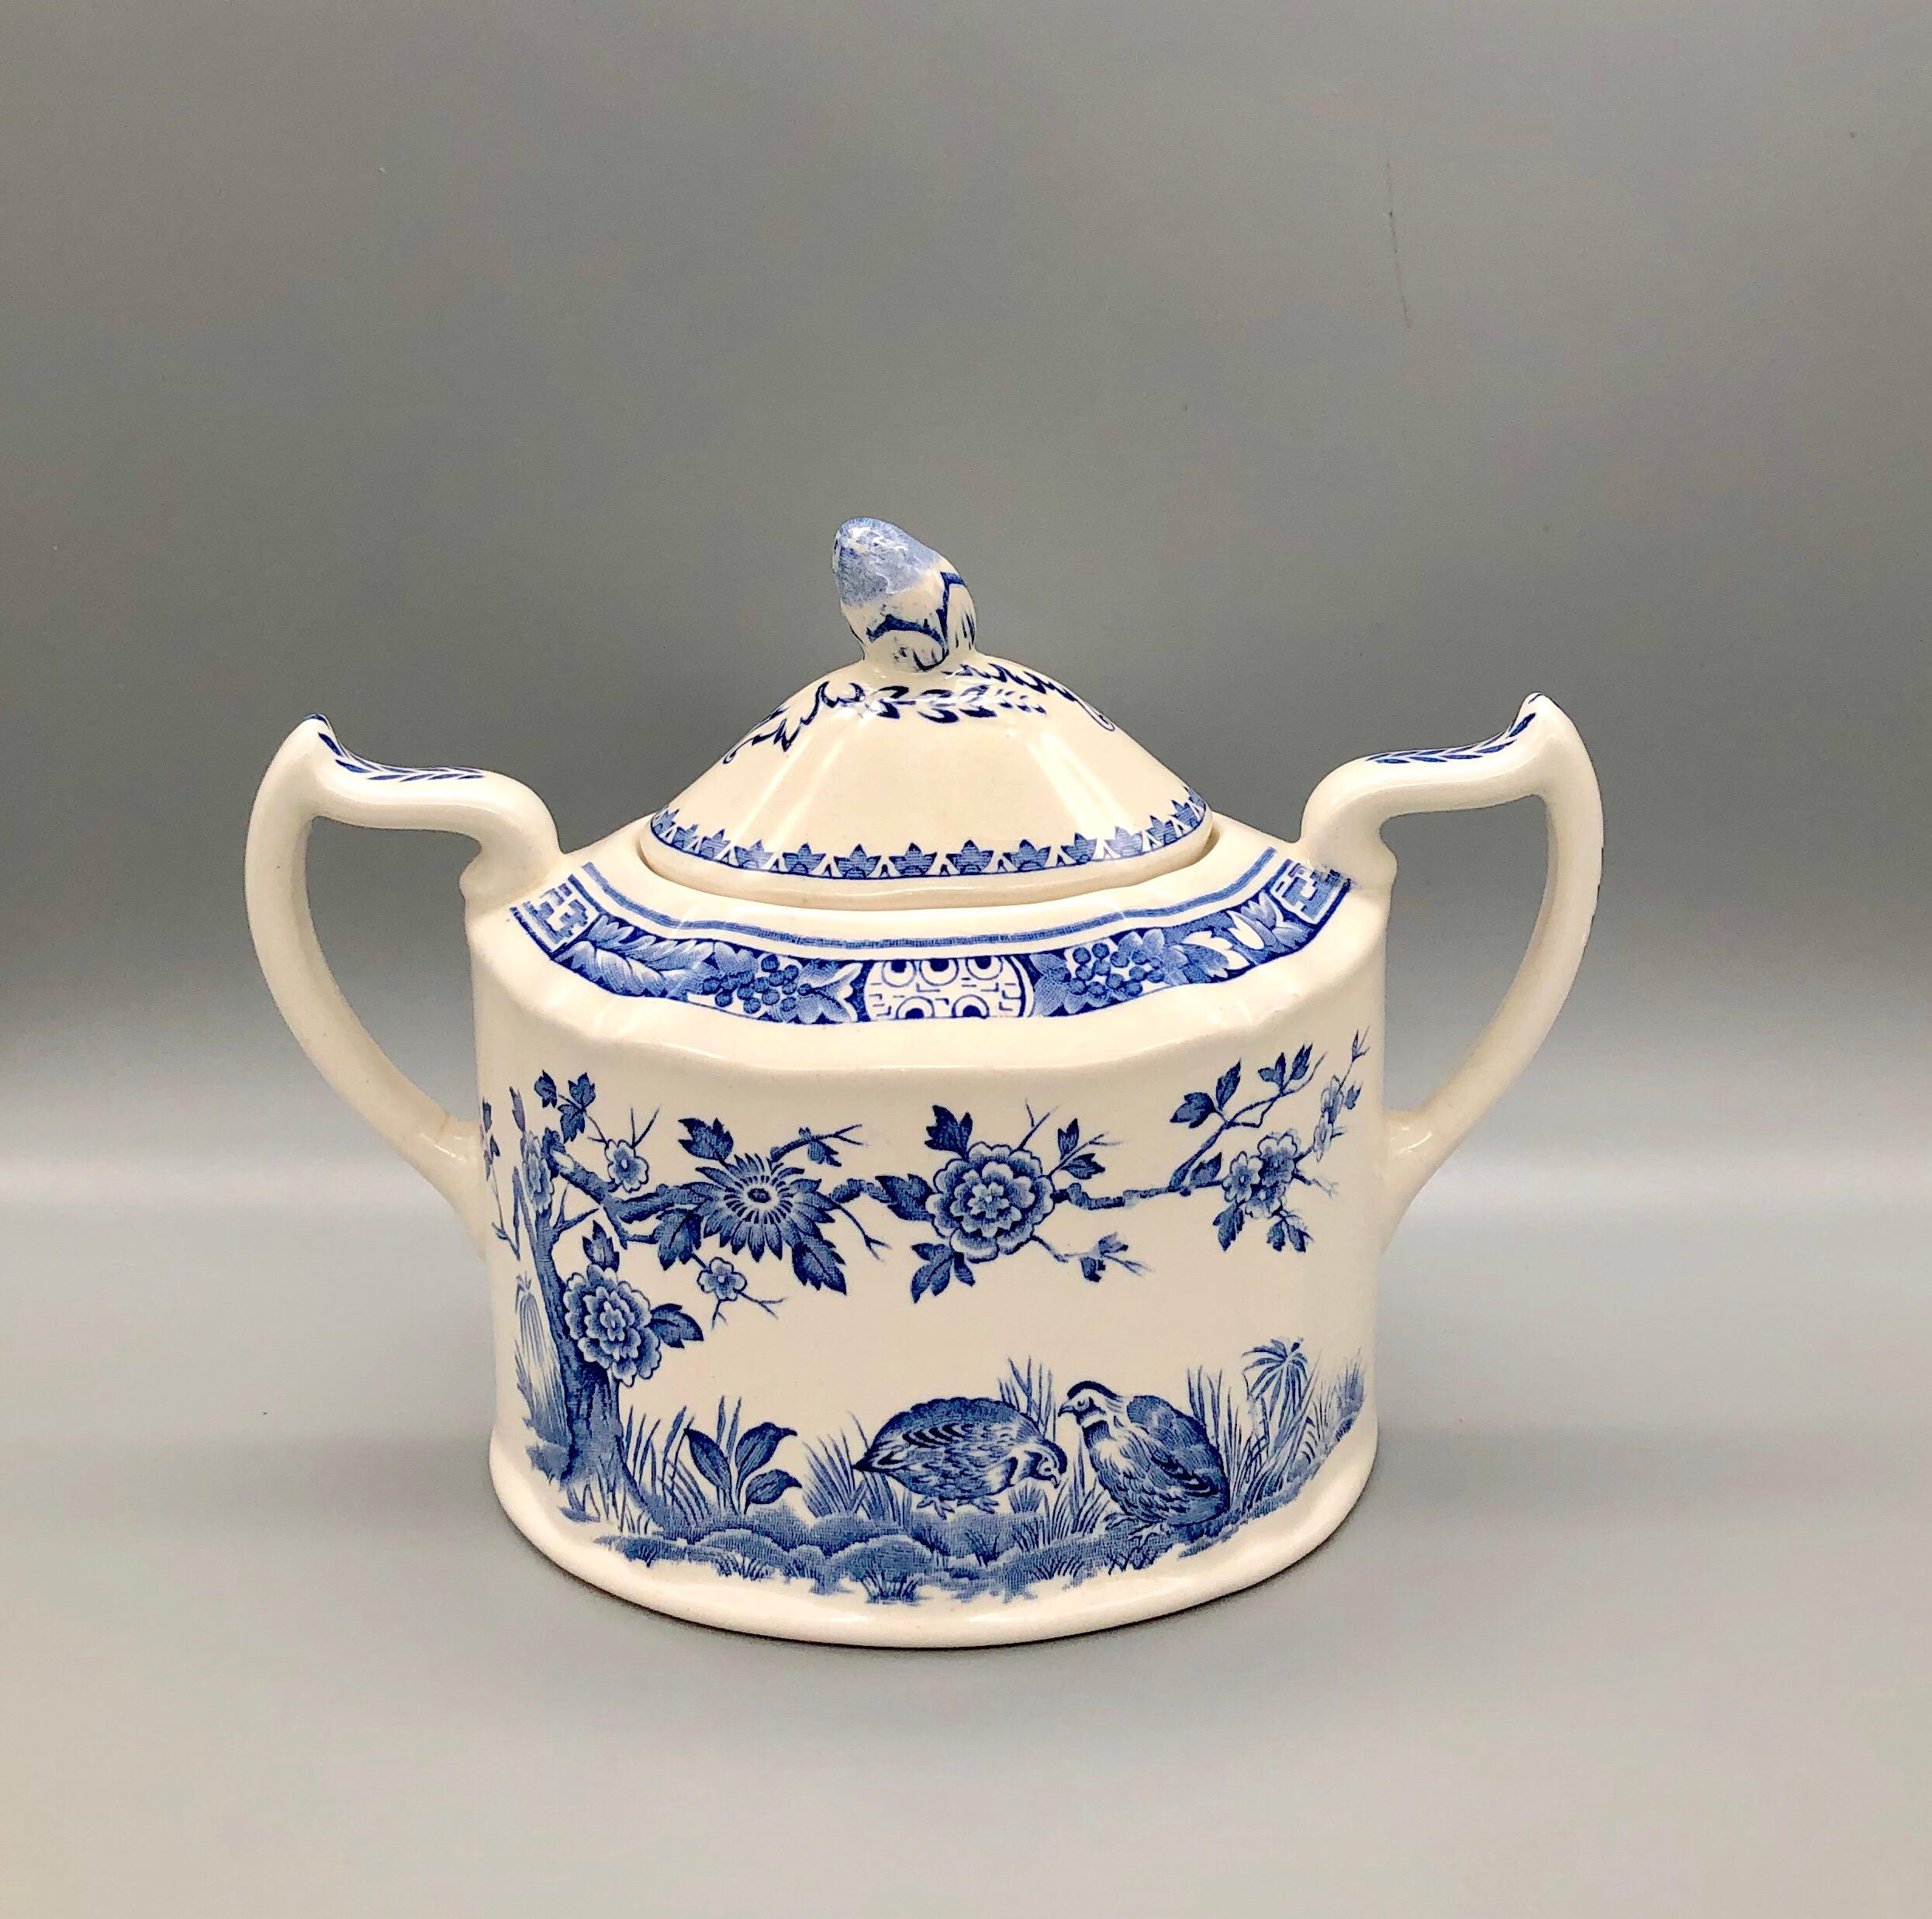 Ceramic Blue and White Furnivals Quail 1913 Pottery Teapot, Creamer and Sugar Bowl Set For Sale